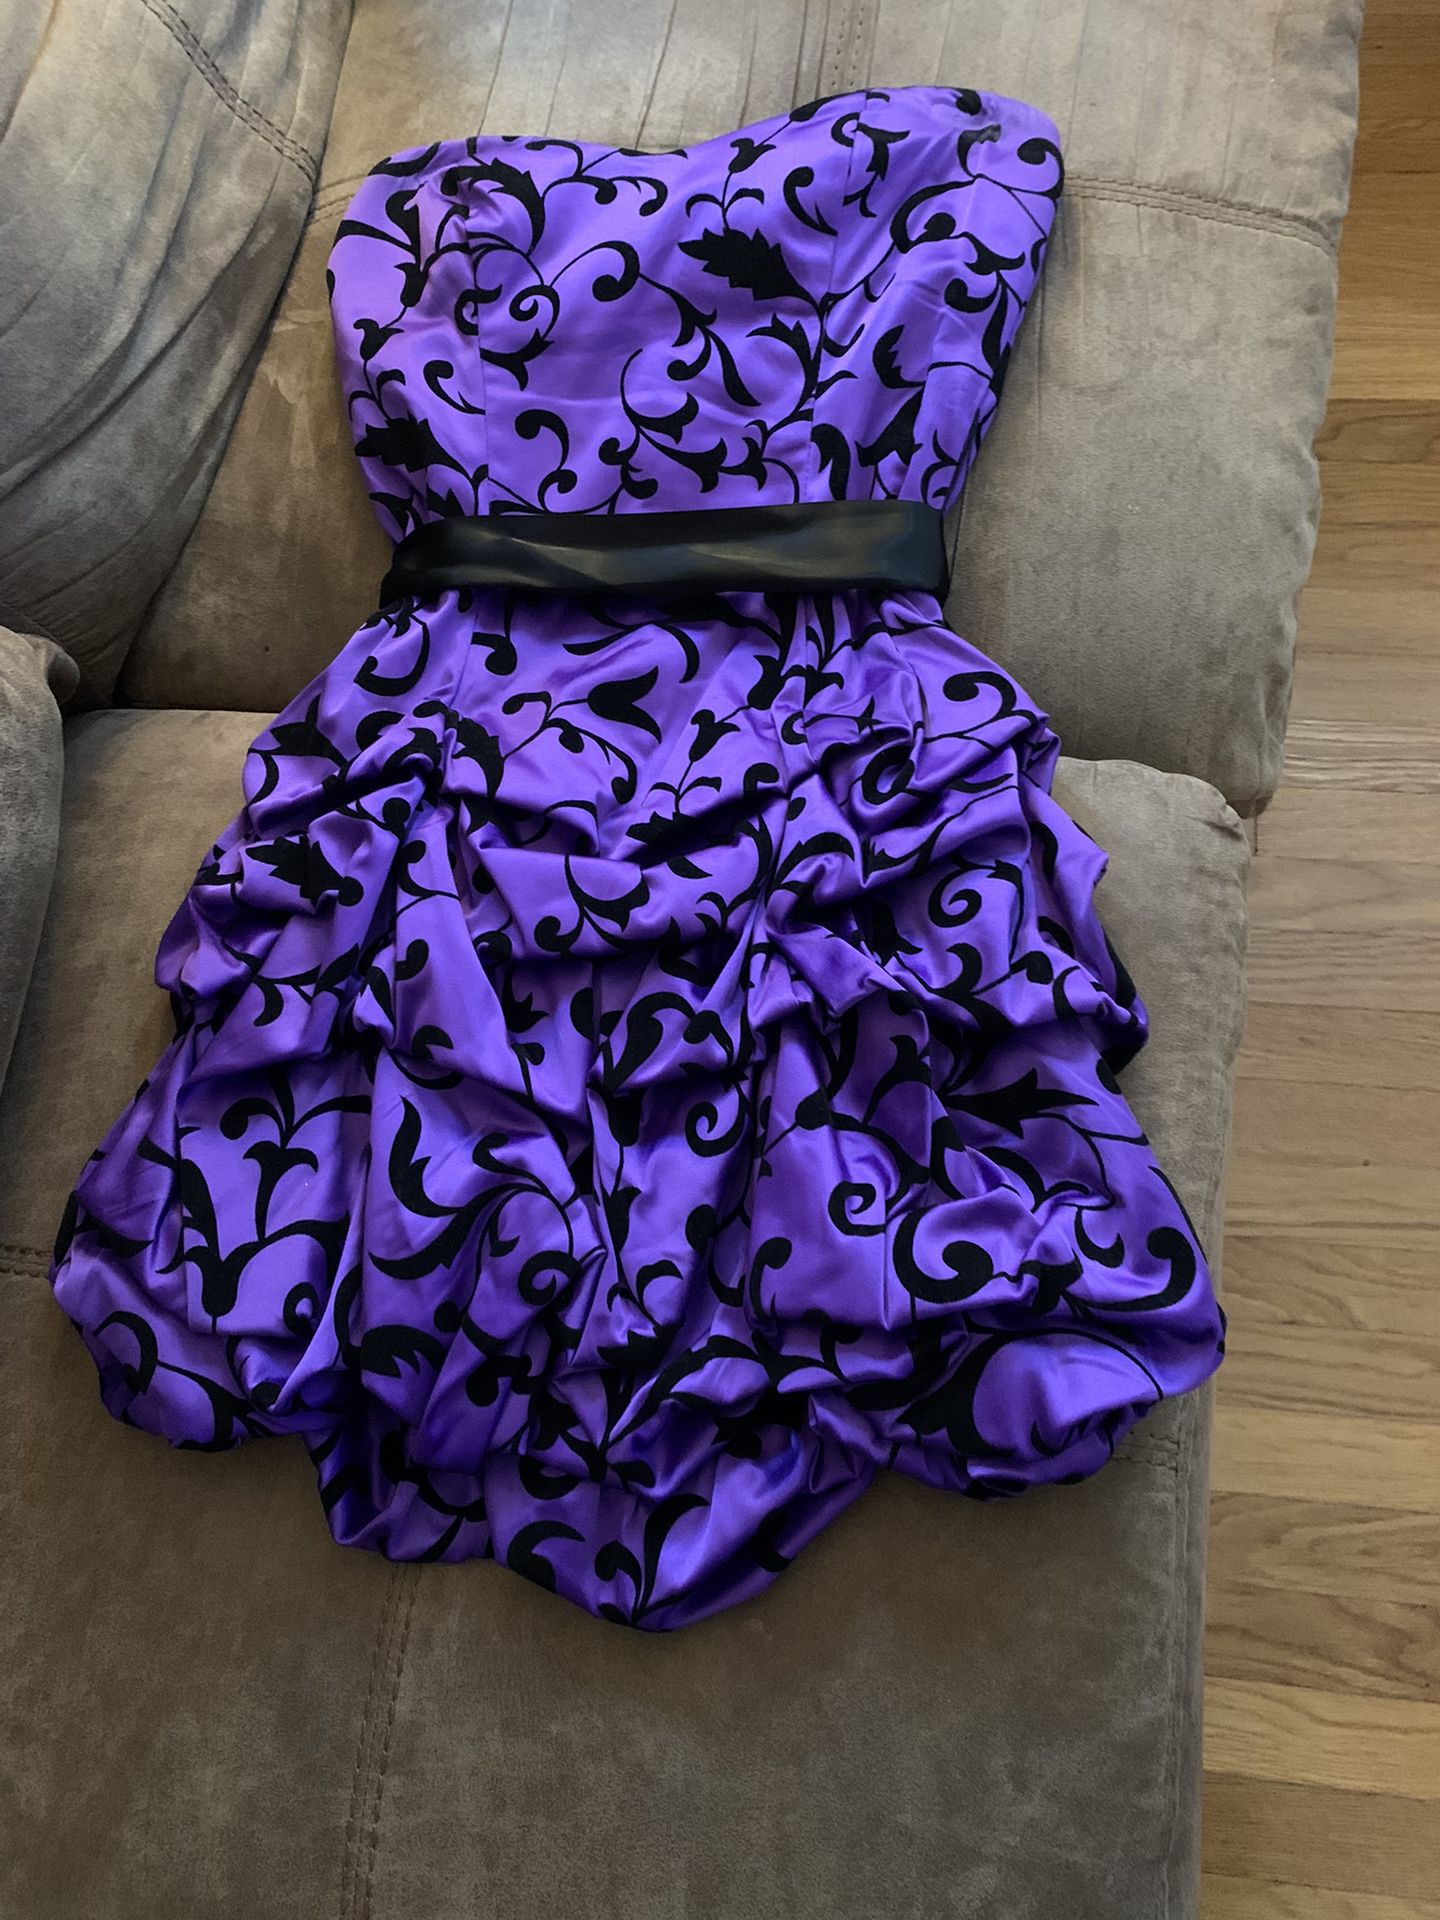 Purple & Black Dress $35 OBO 